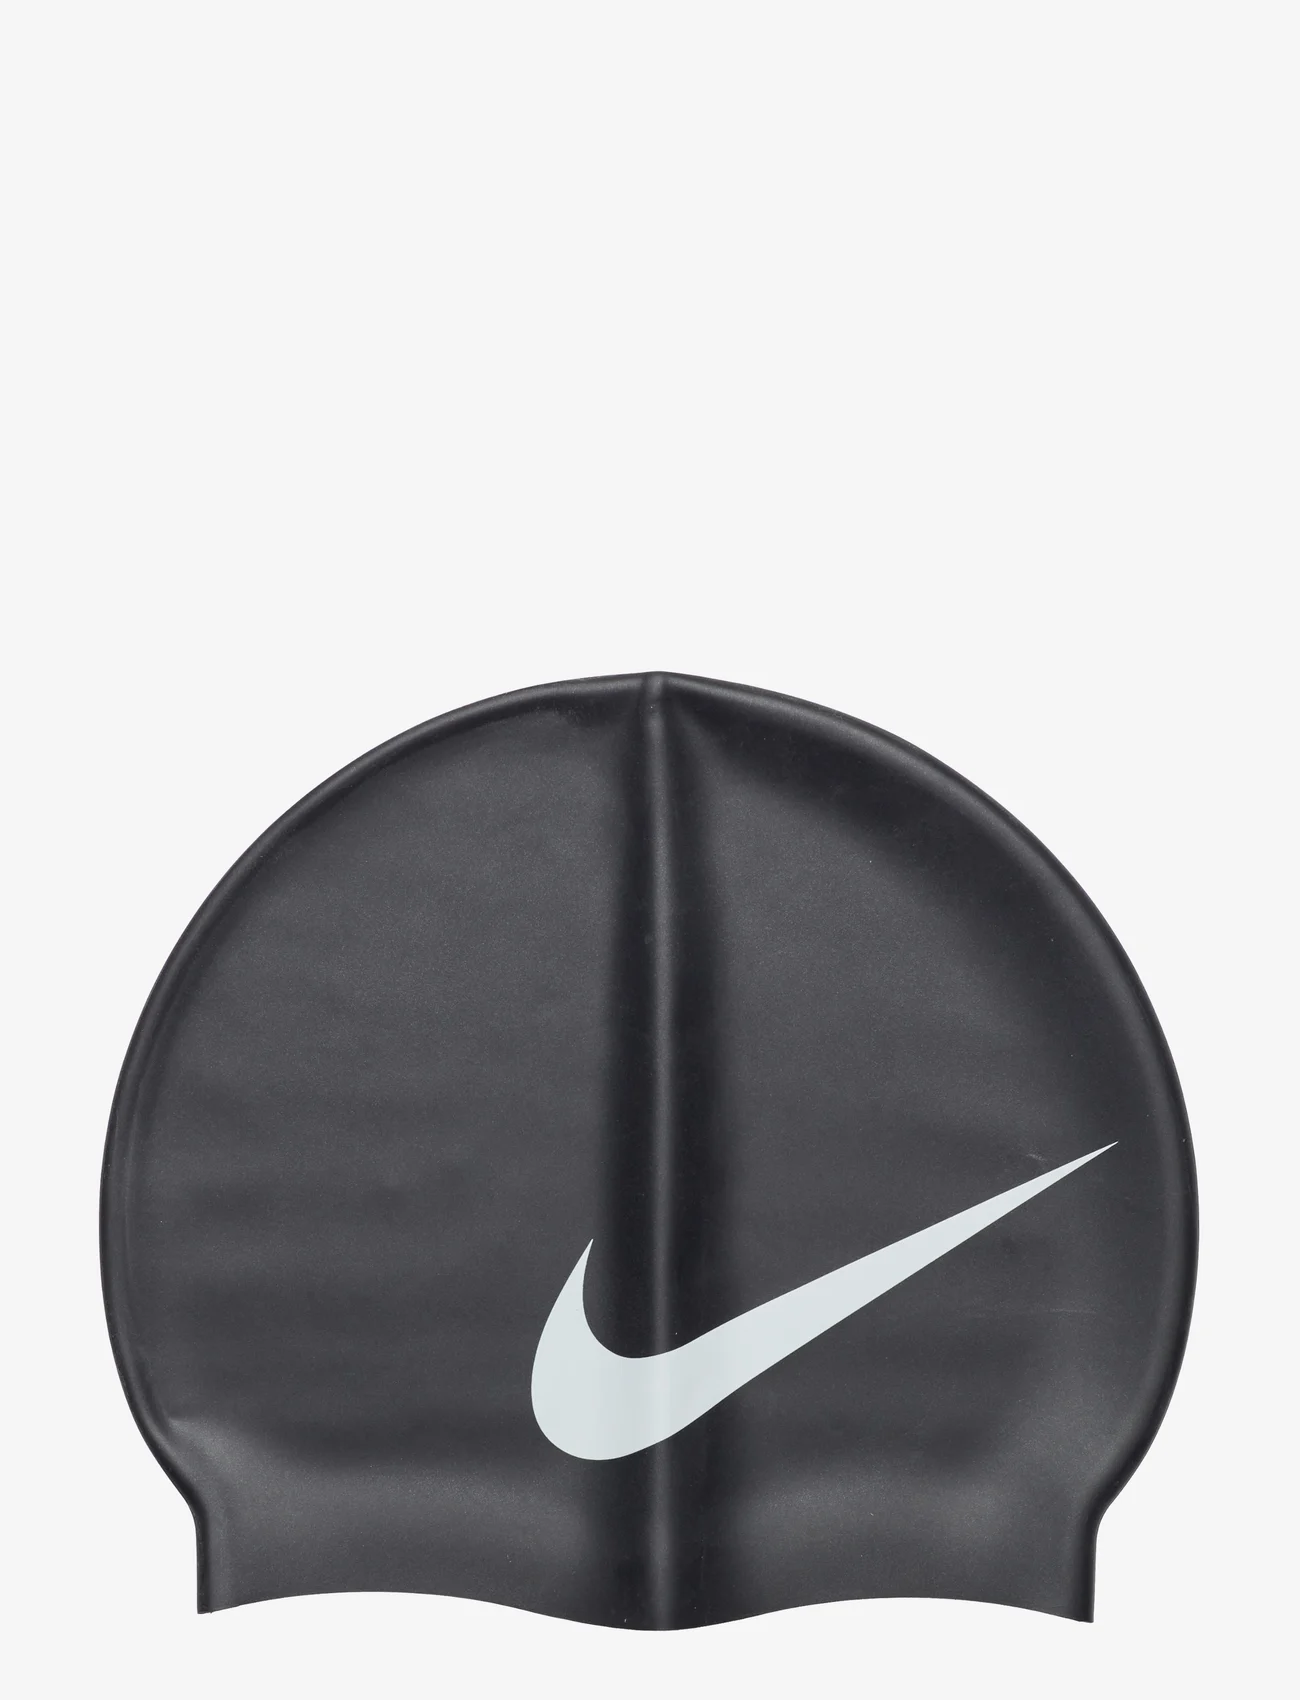 NIKE SWIM - Nike Big Swoosh Cap - lowest prices - black - 0